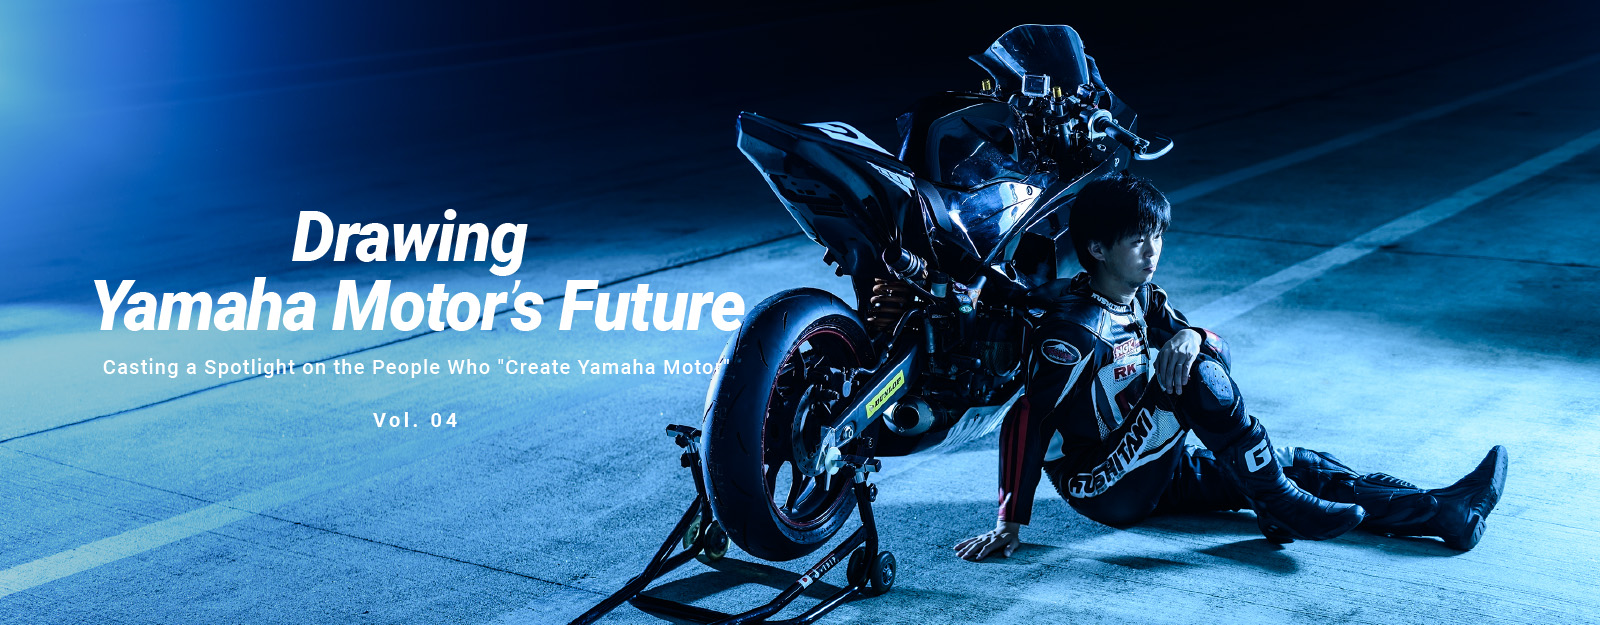 Drawing Yamaha Motor’s Future -Casting a Spotlight on the People Who “Create Yamaha Motor” Vol. 04